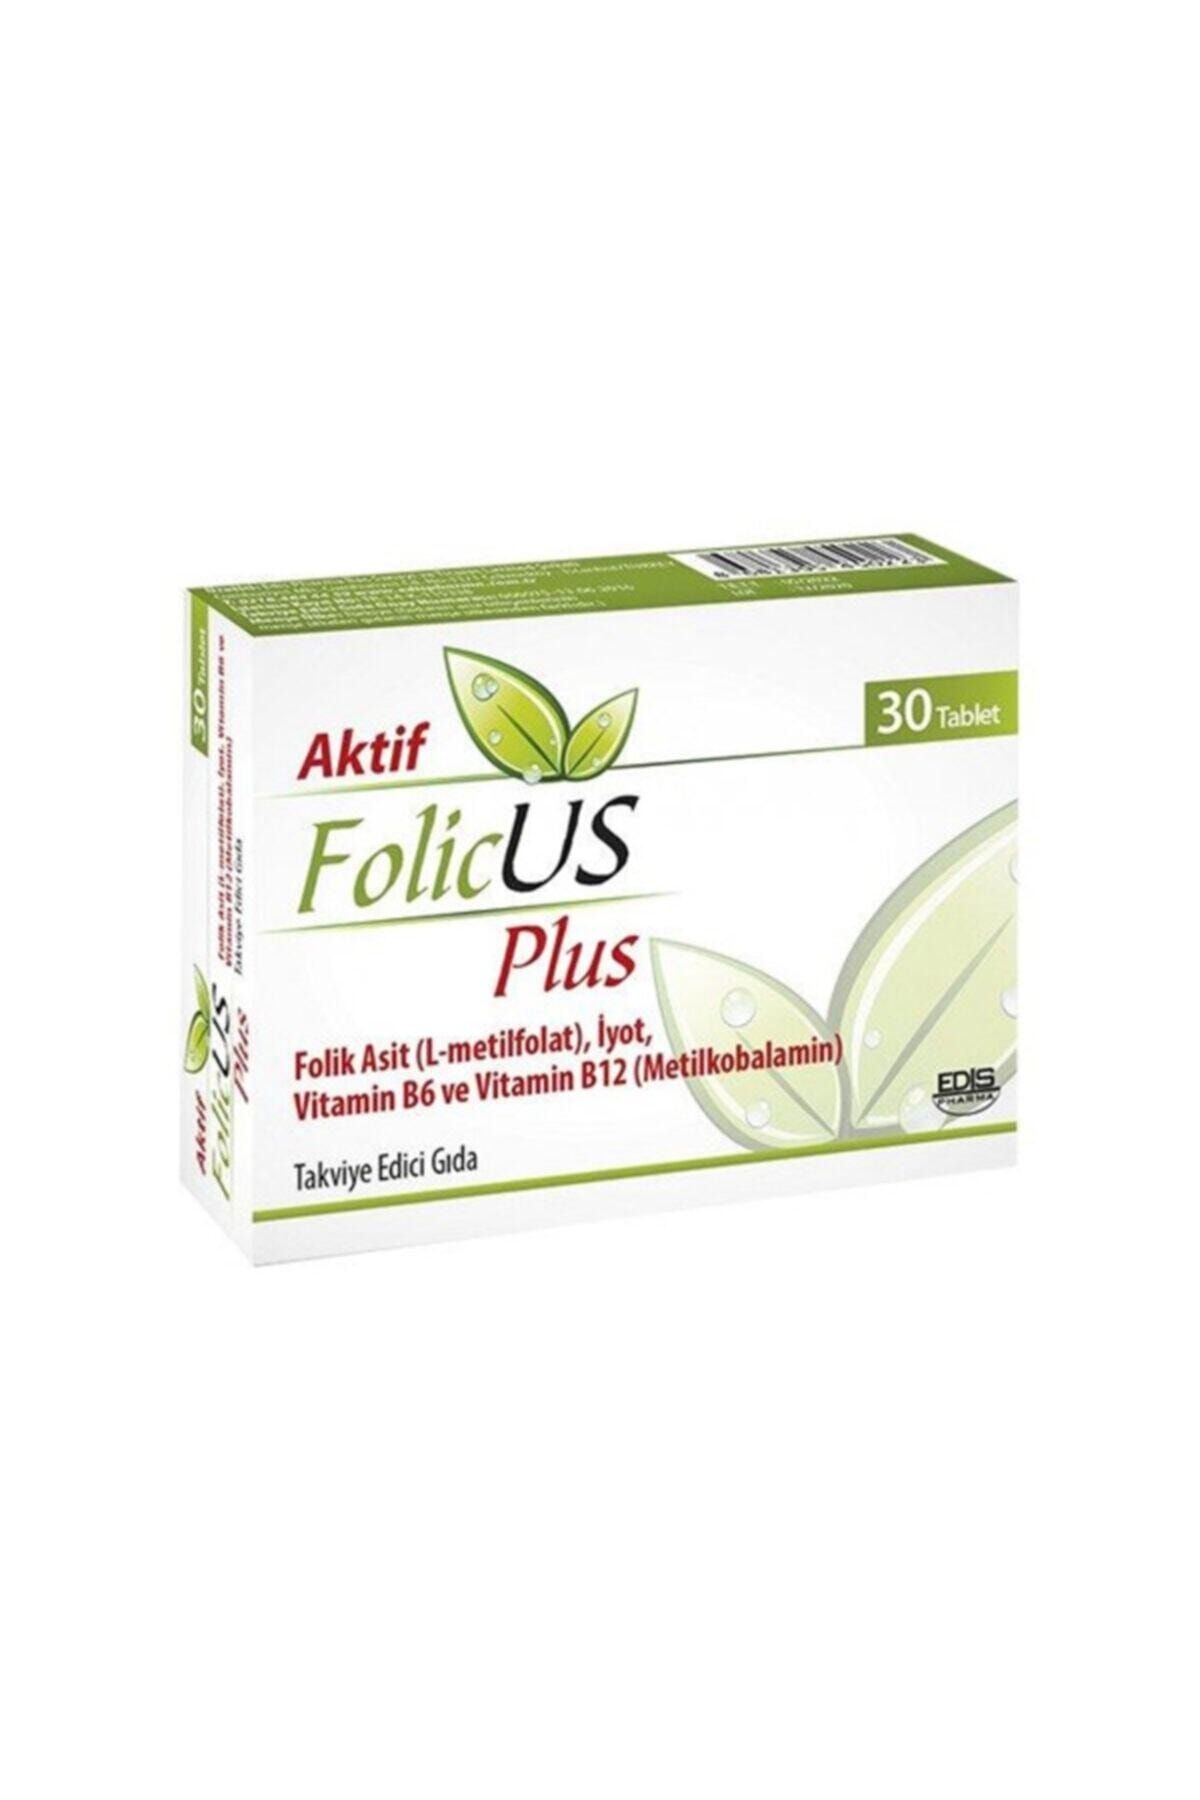 EDİS PHARMA Aktif Folicus Plus Takviye Edici Gıda 30 Tablet